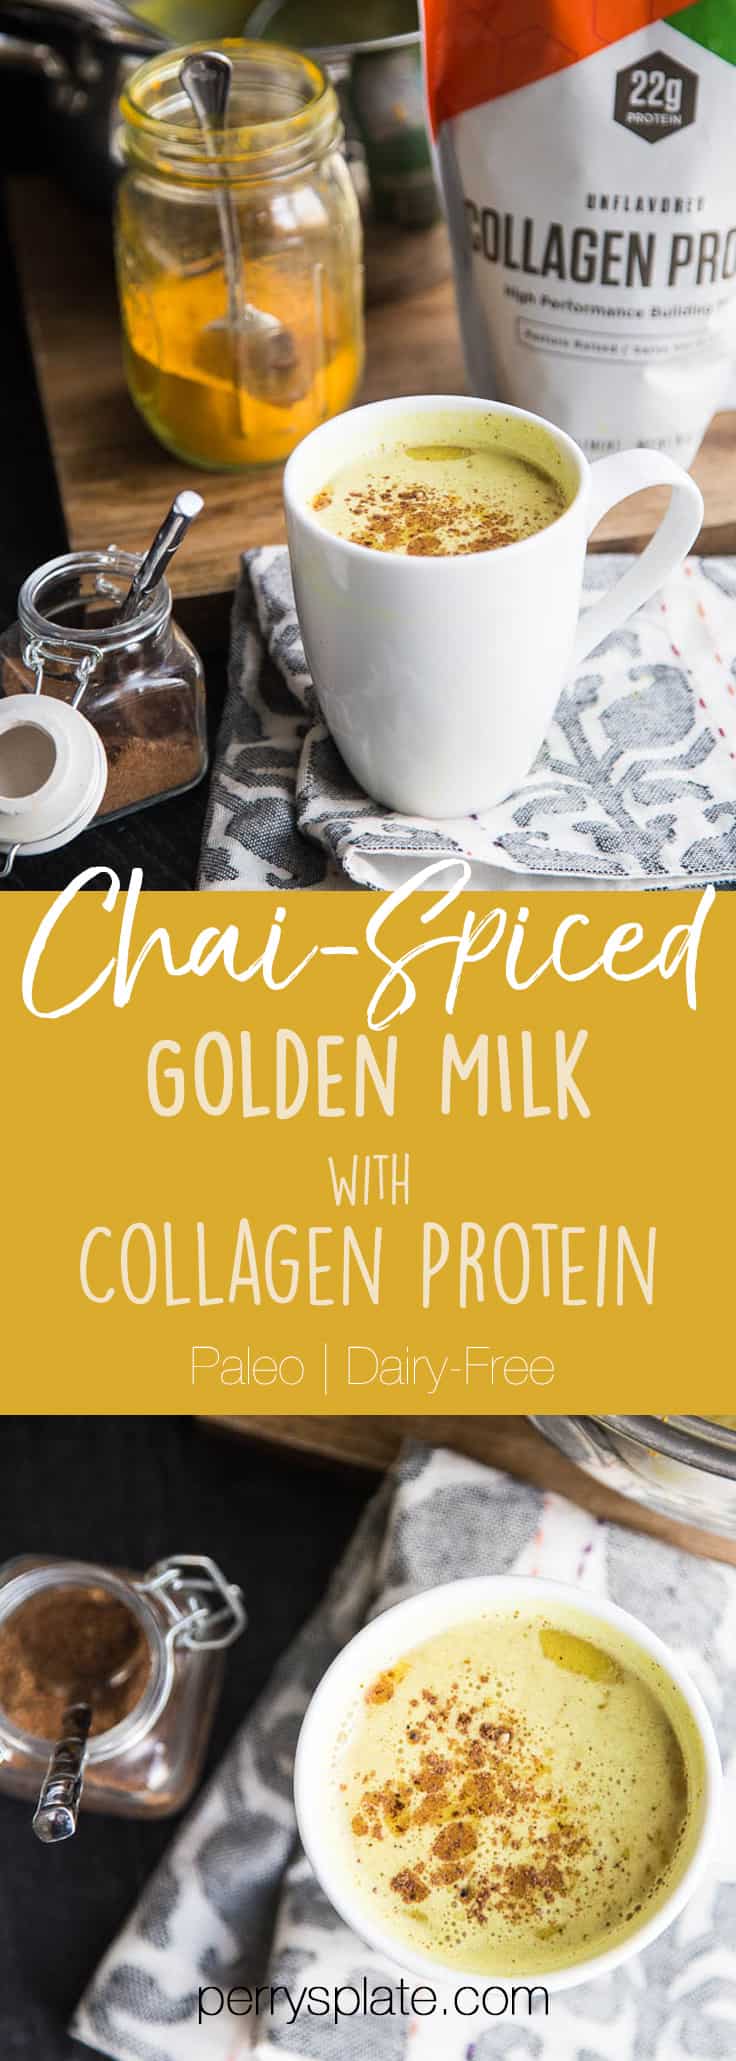 Chai-Spiced Golden Milk with Collagen Protein | dairy free recipes | golden milk recipes | paleo recipes | keto recipes